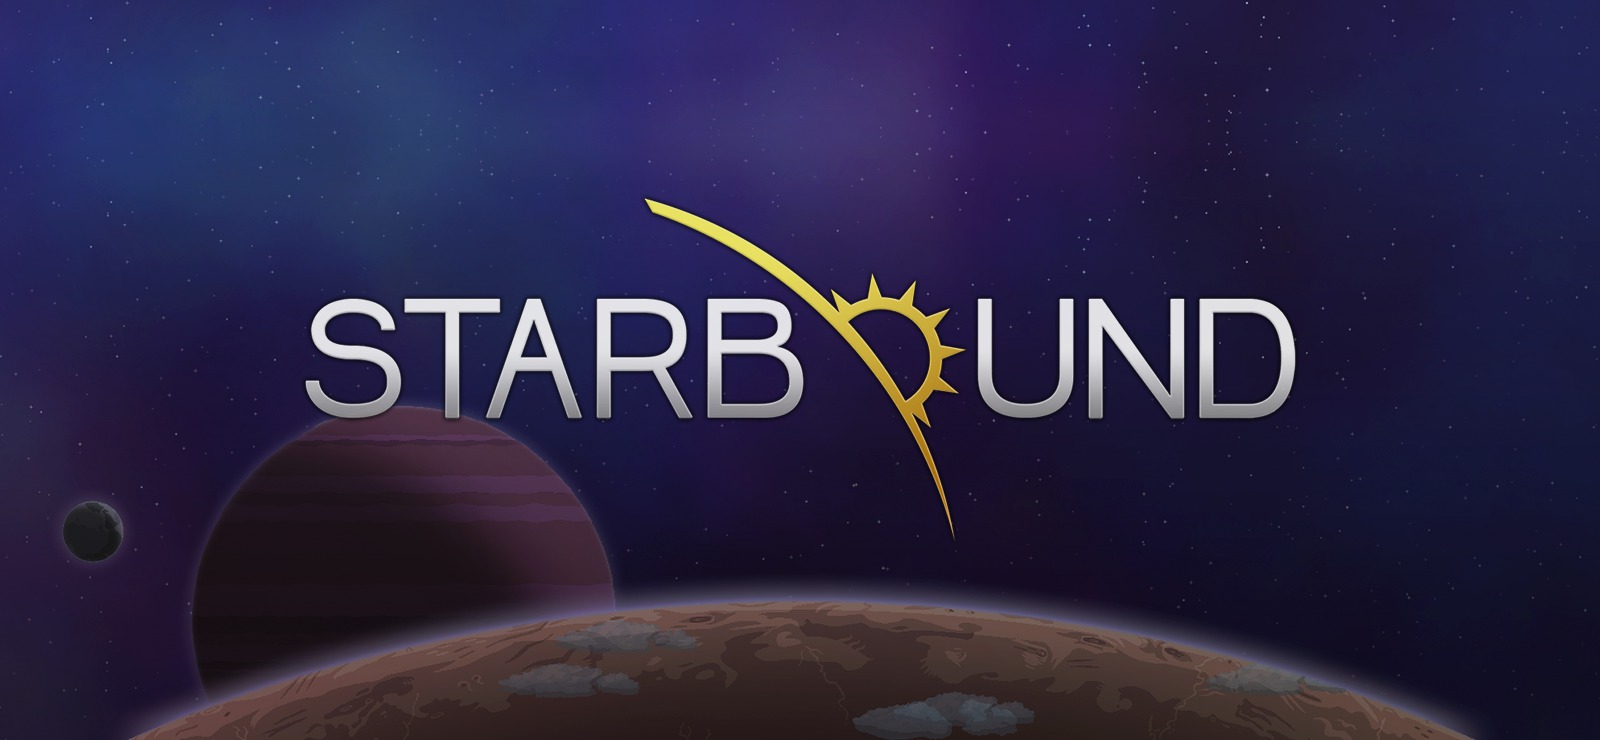 Starbound Game Logo